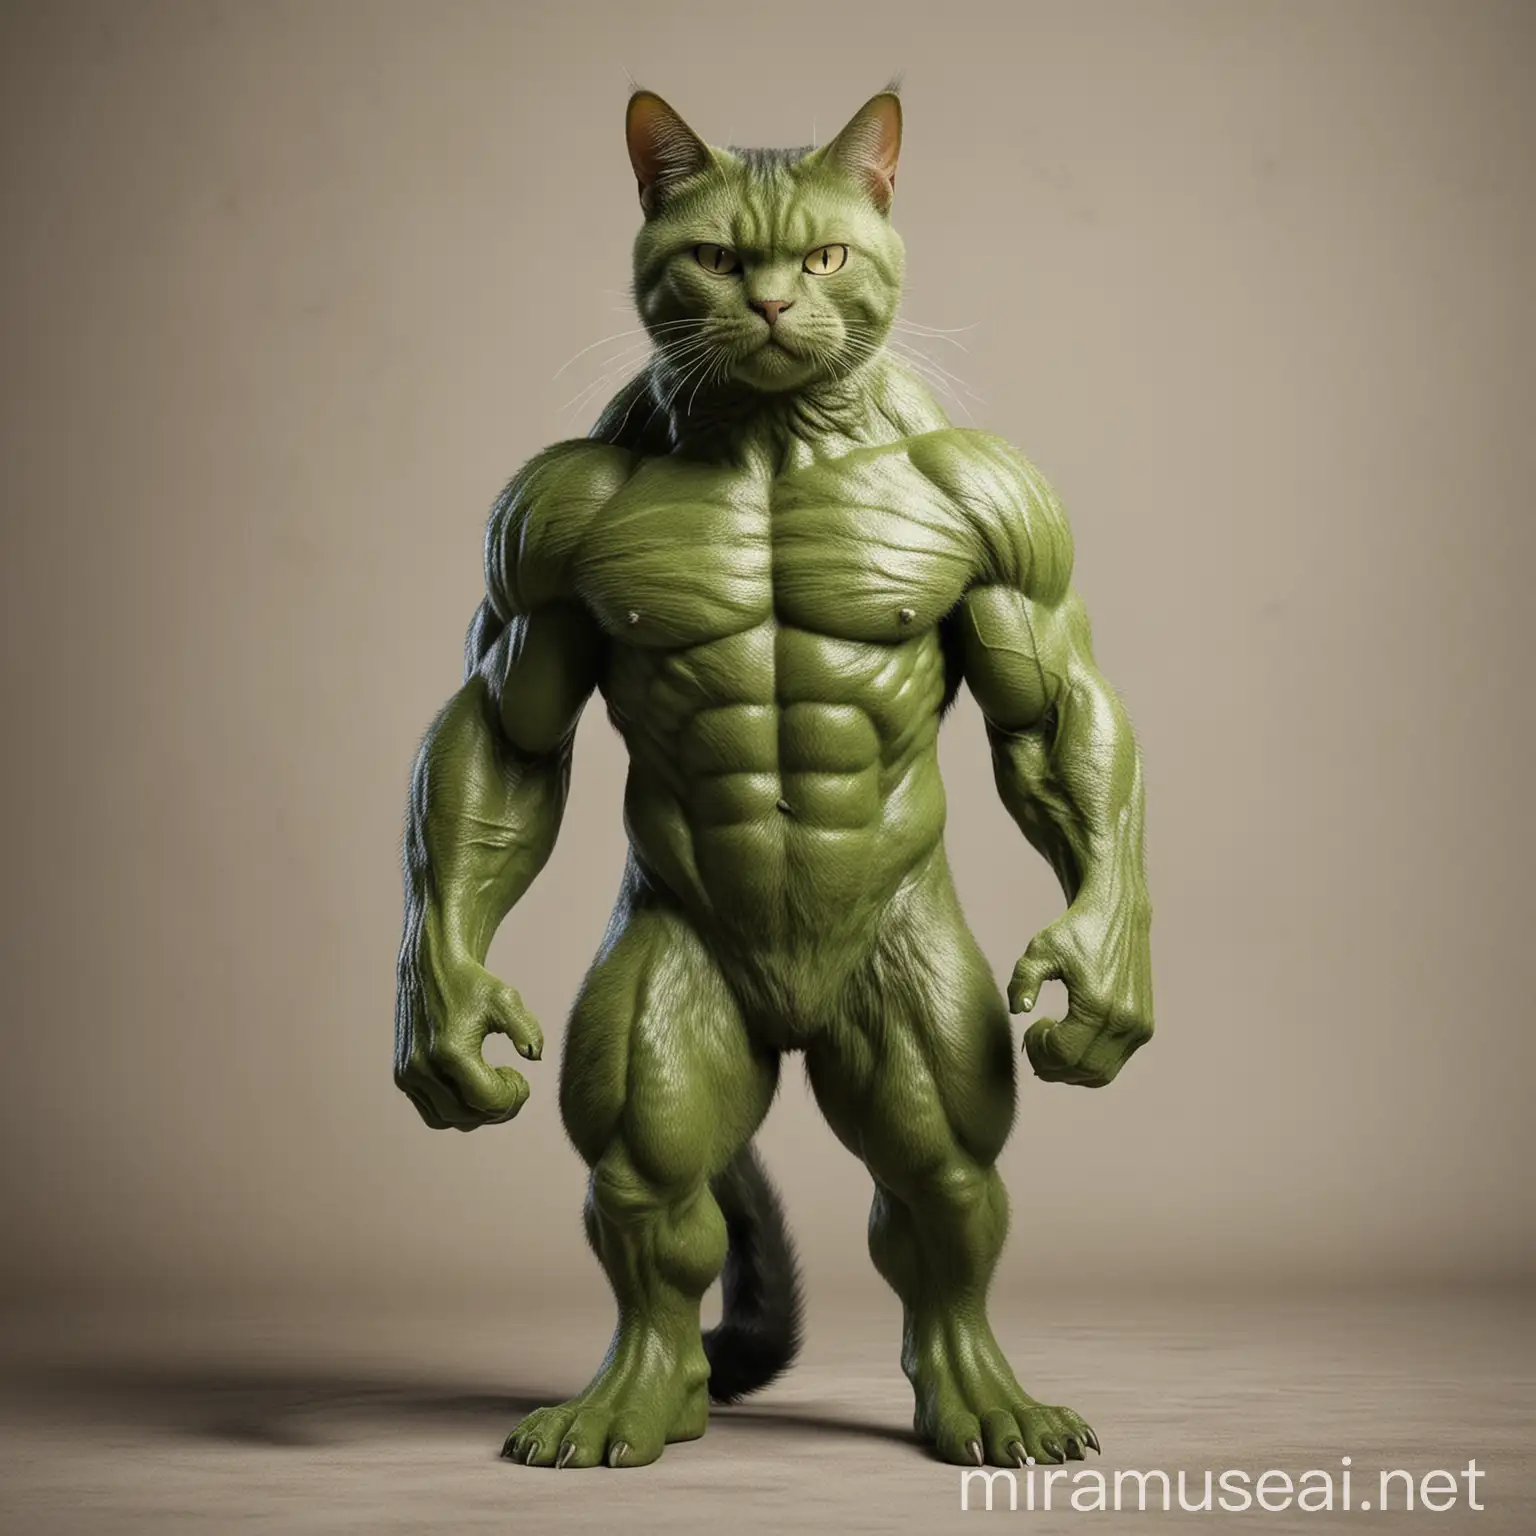 Hulk Style Cat Animal Standing Full Body